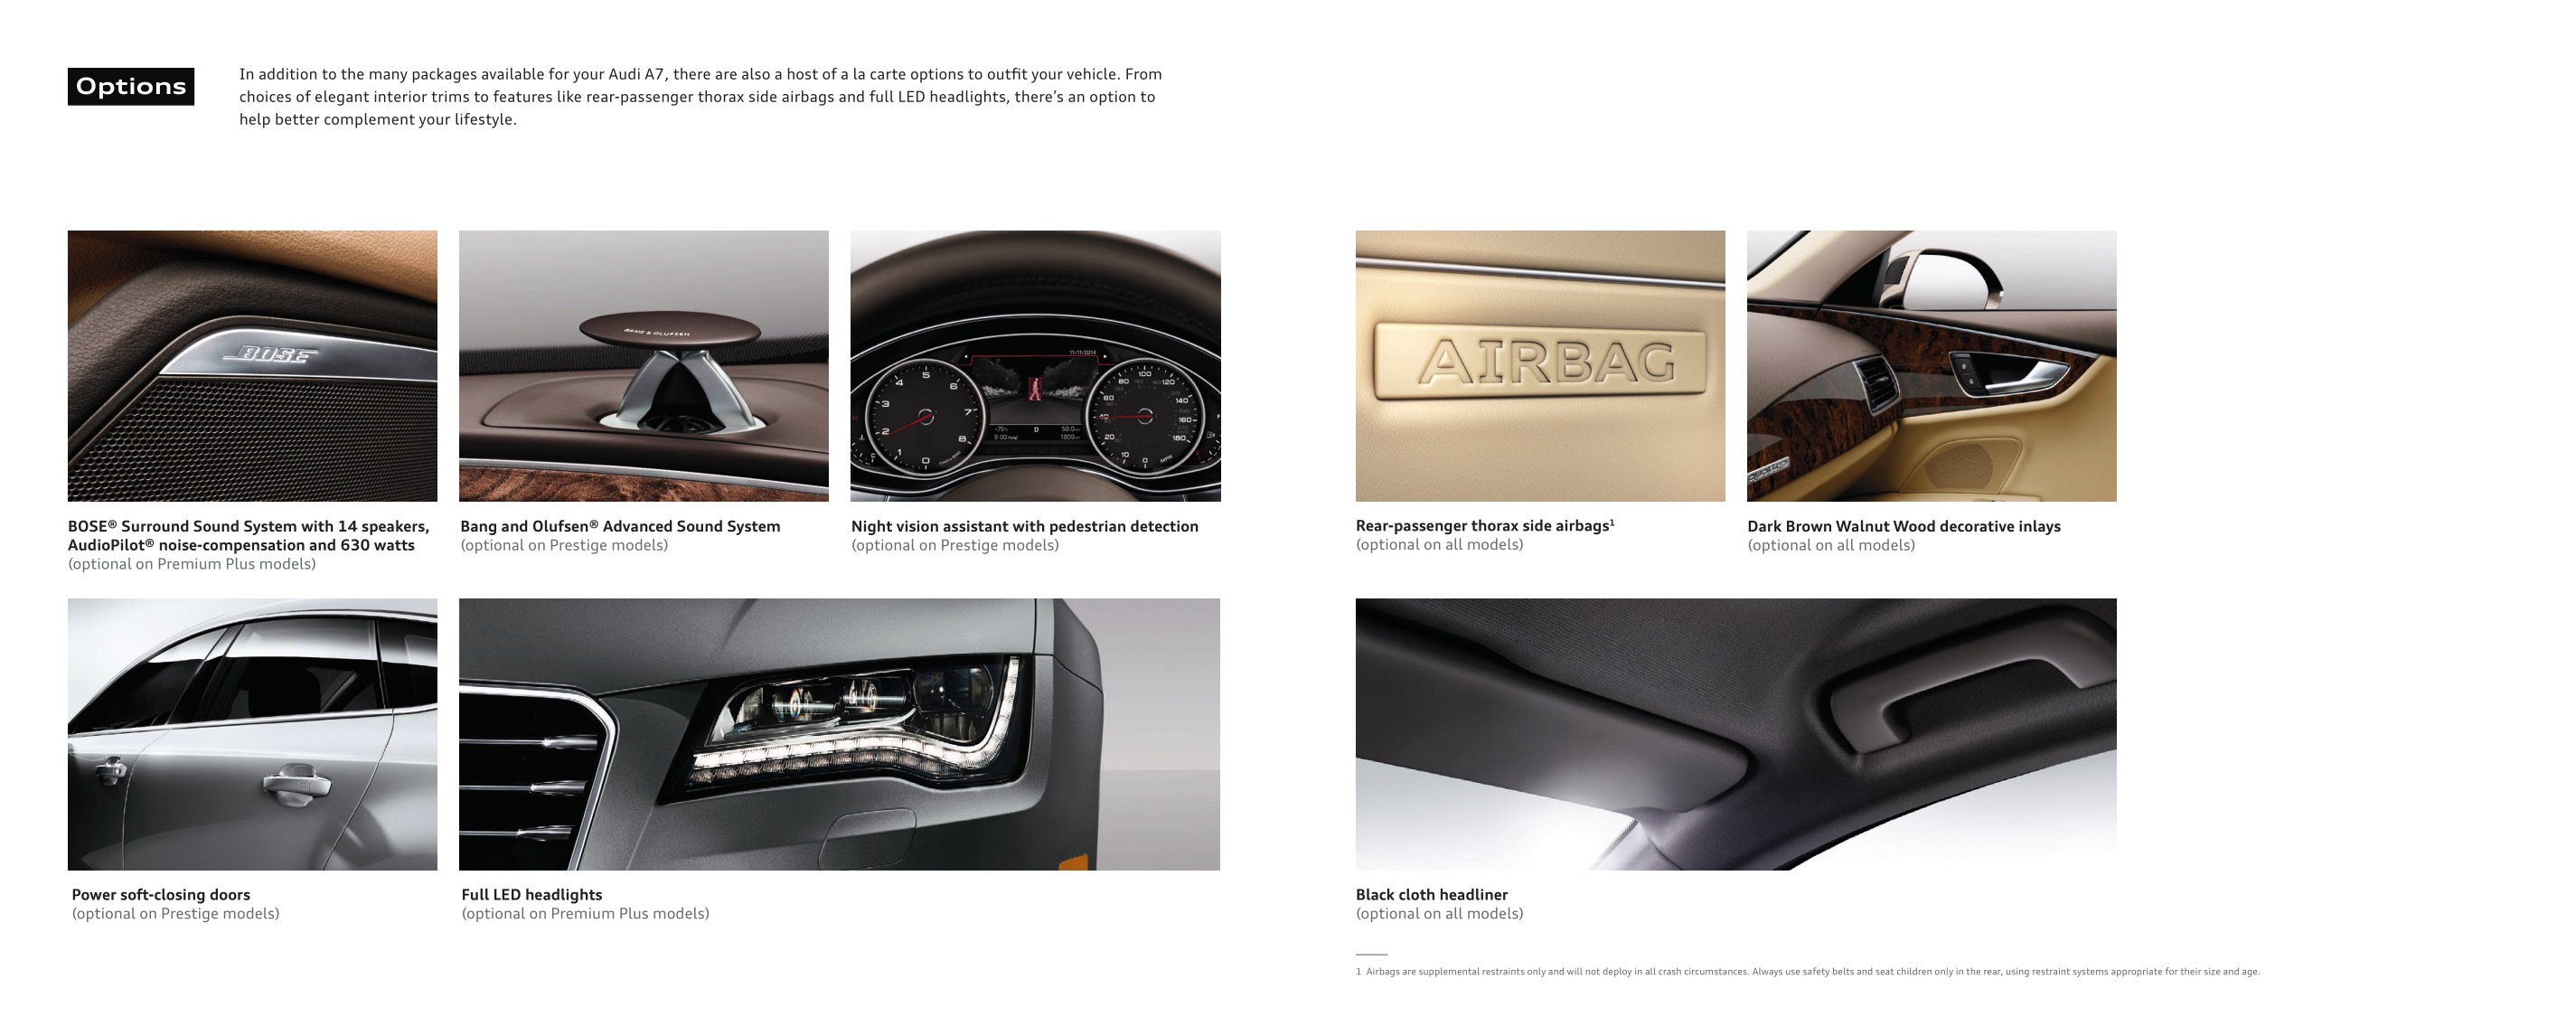 2015 Audi A7 Brochure Page 17